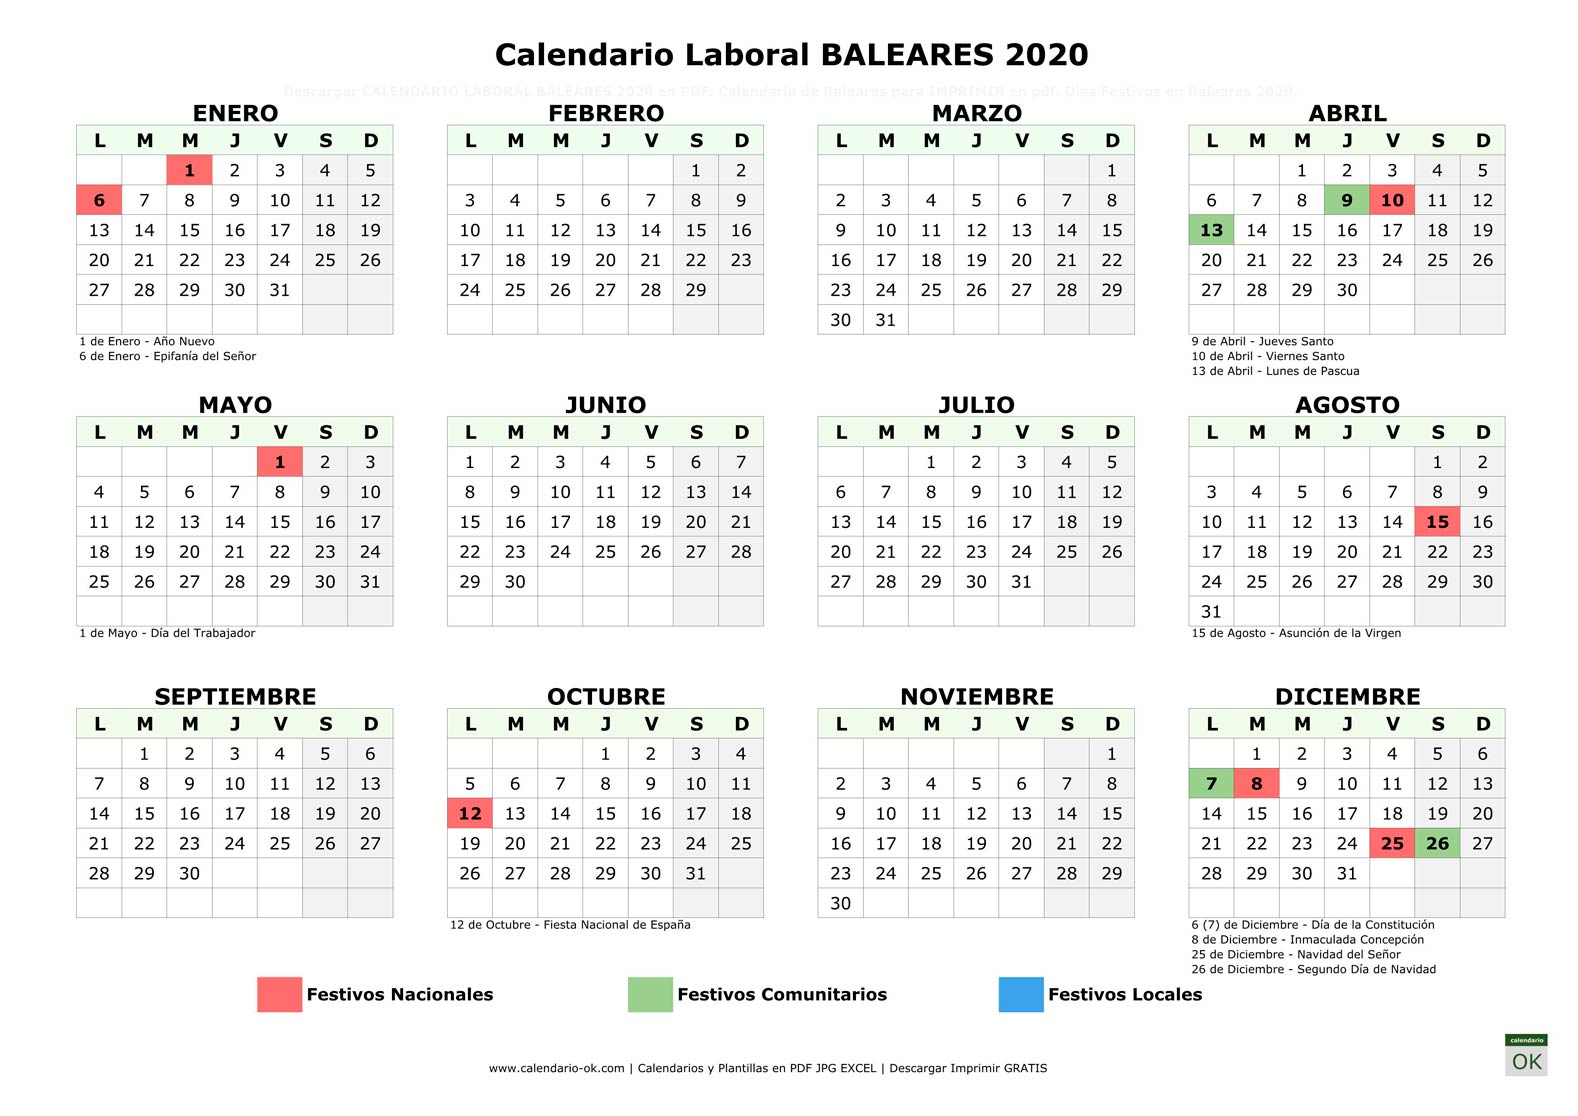 Calendario Laboral BALEARES 2020 horizontal